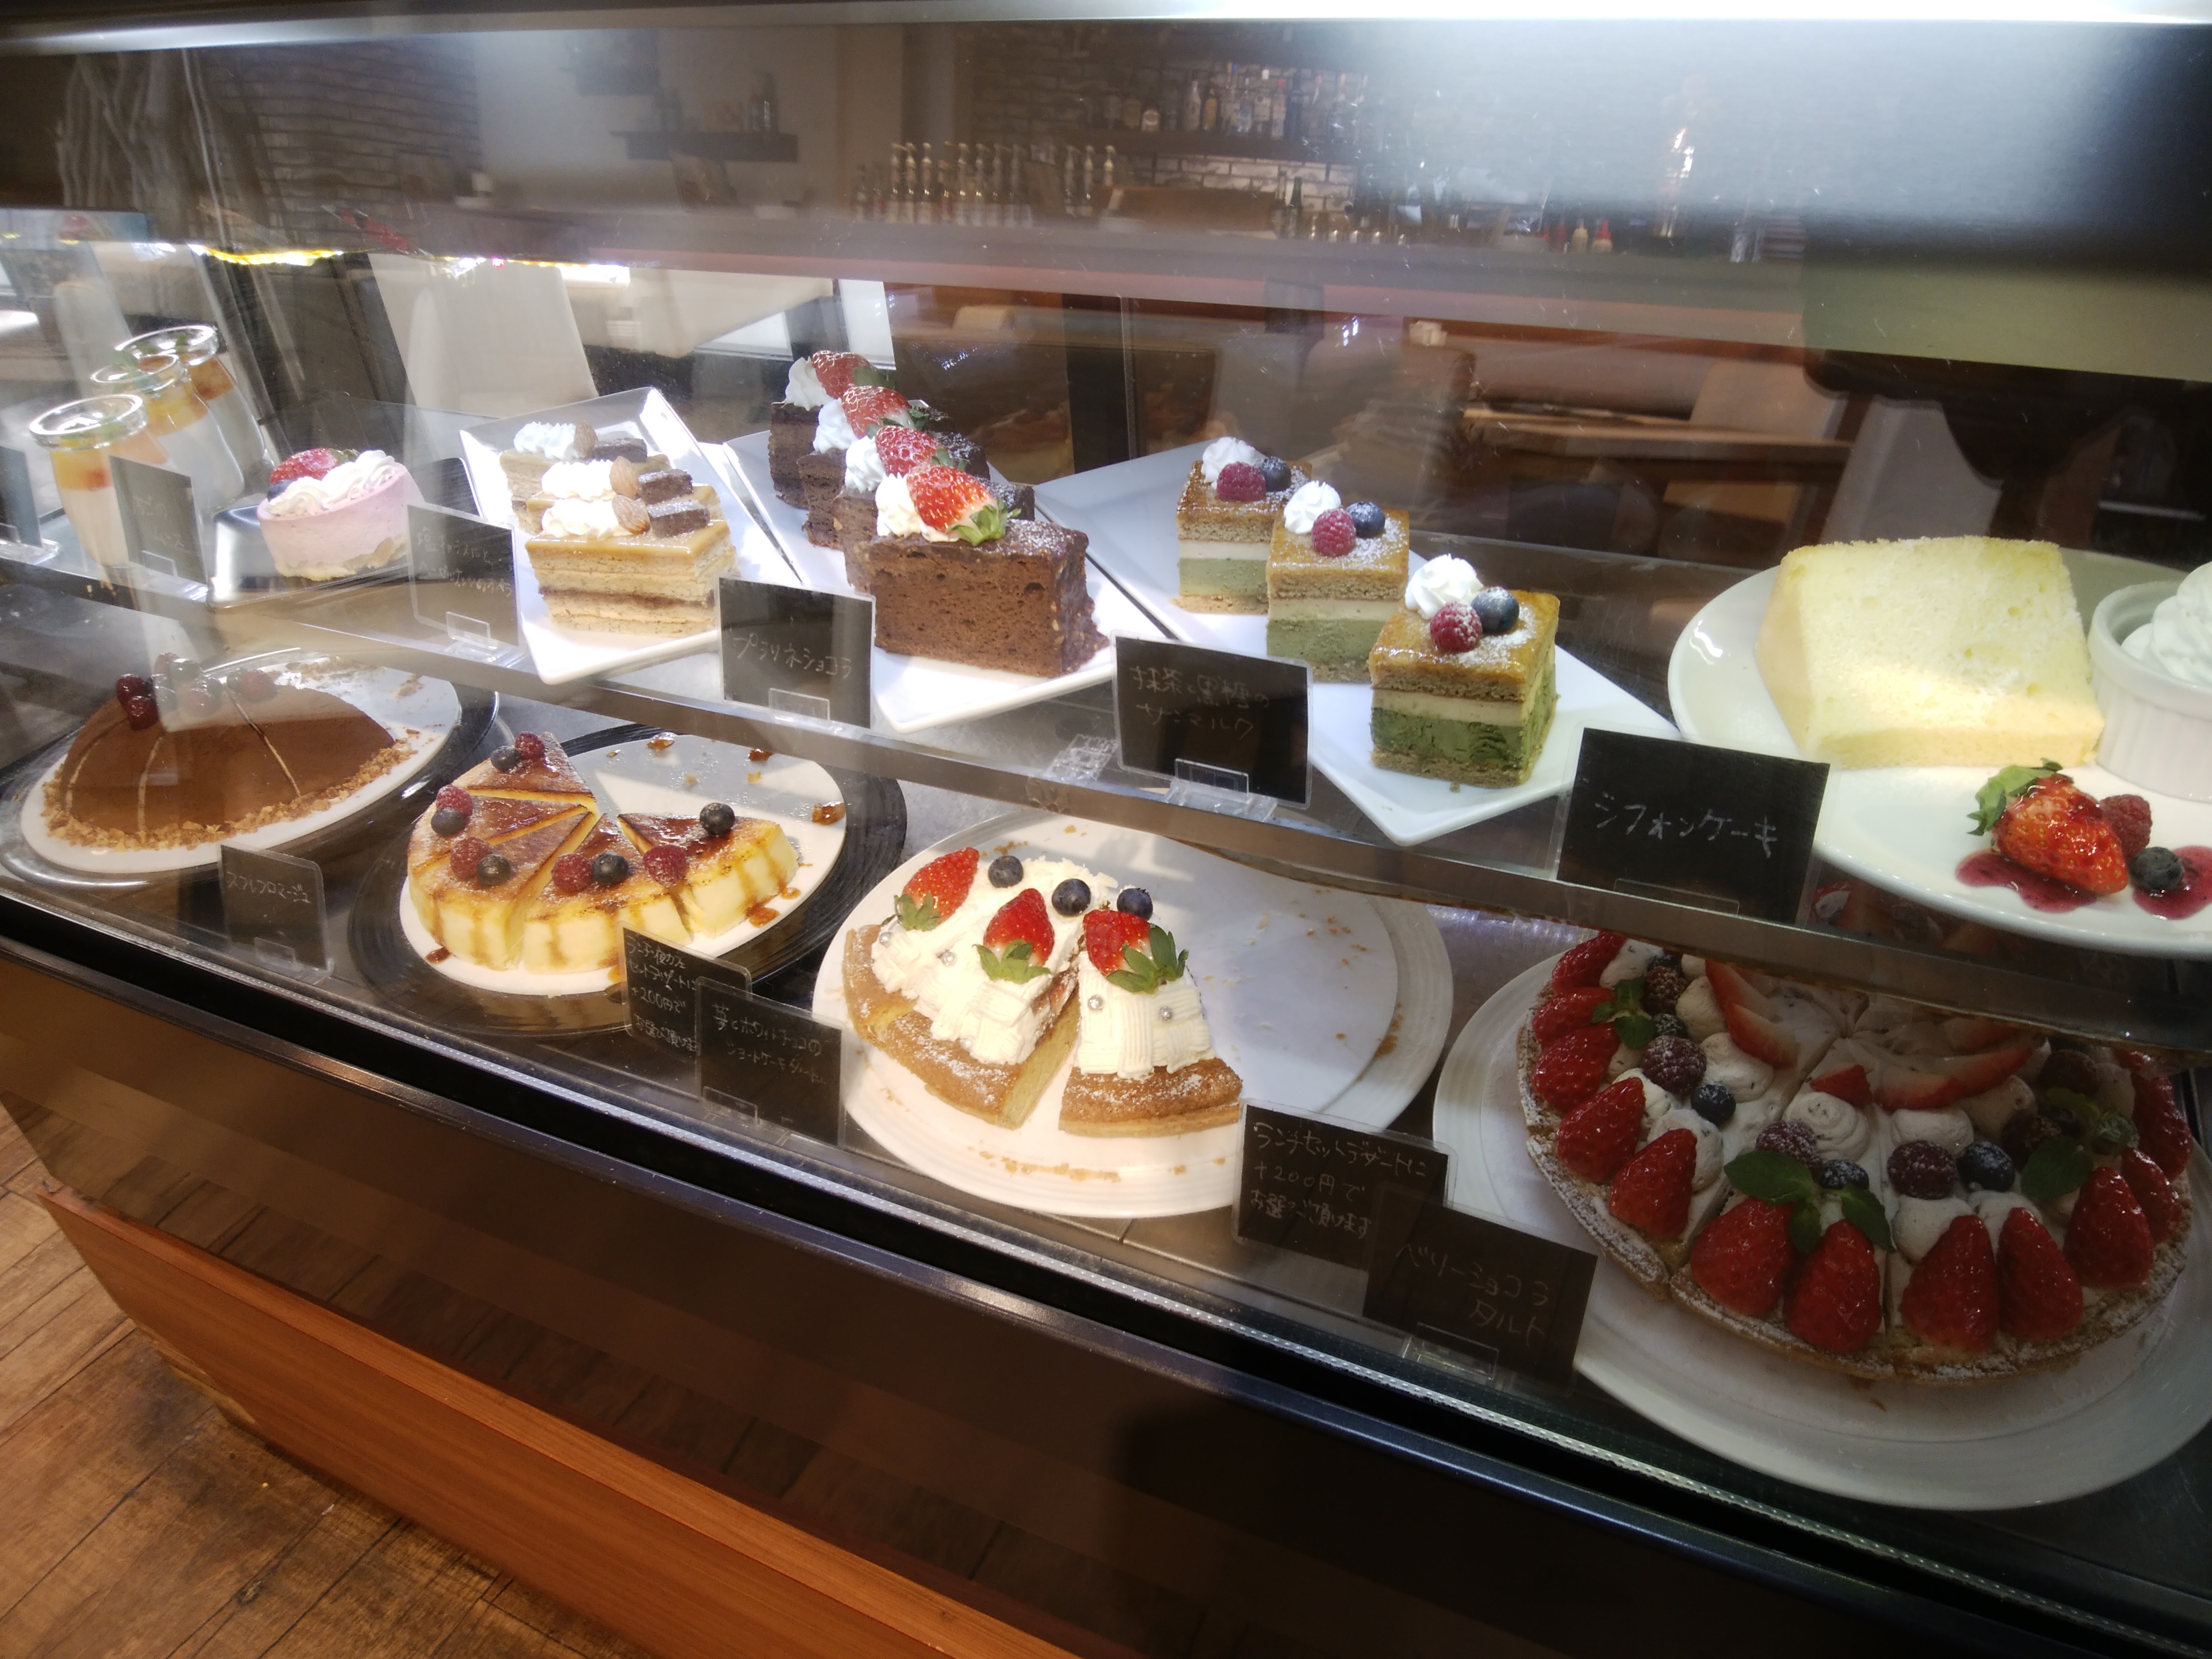 Cafe Bar Valis バリーズ 名古屋市中村区 三度の飯よりケーキ好き 三重県にもっとケーキバイキングを